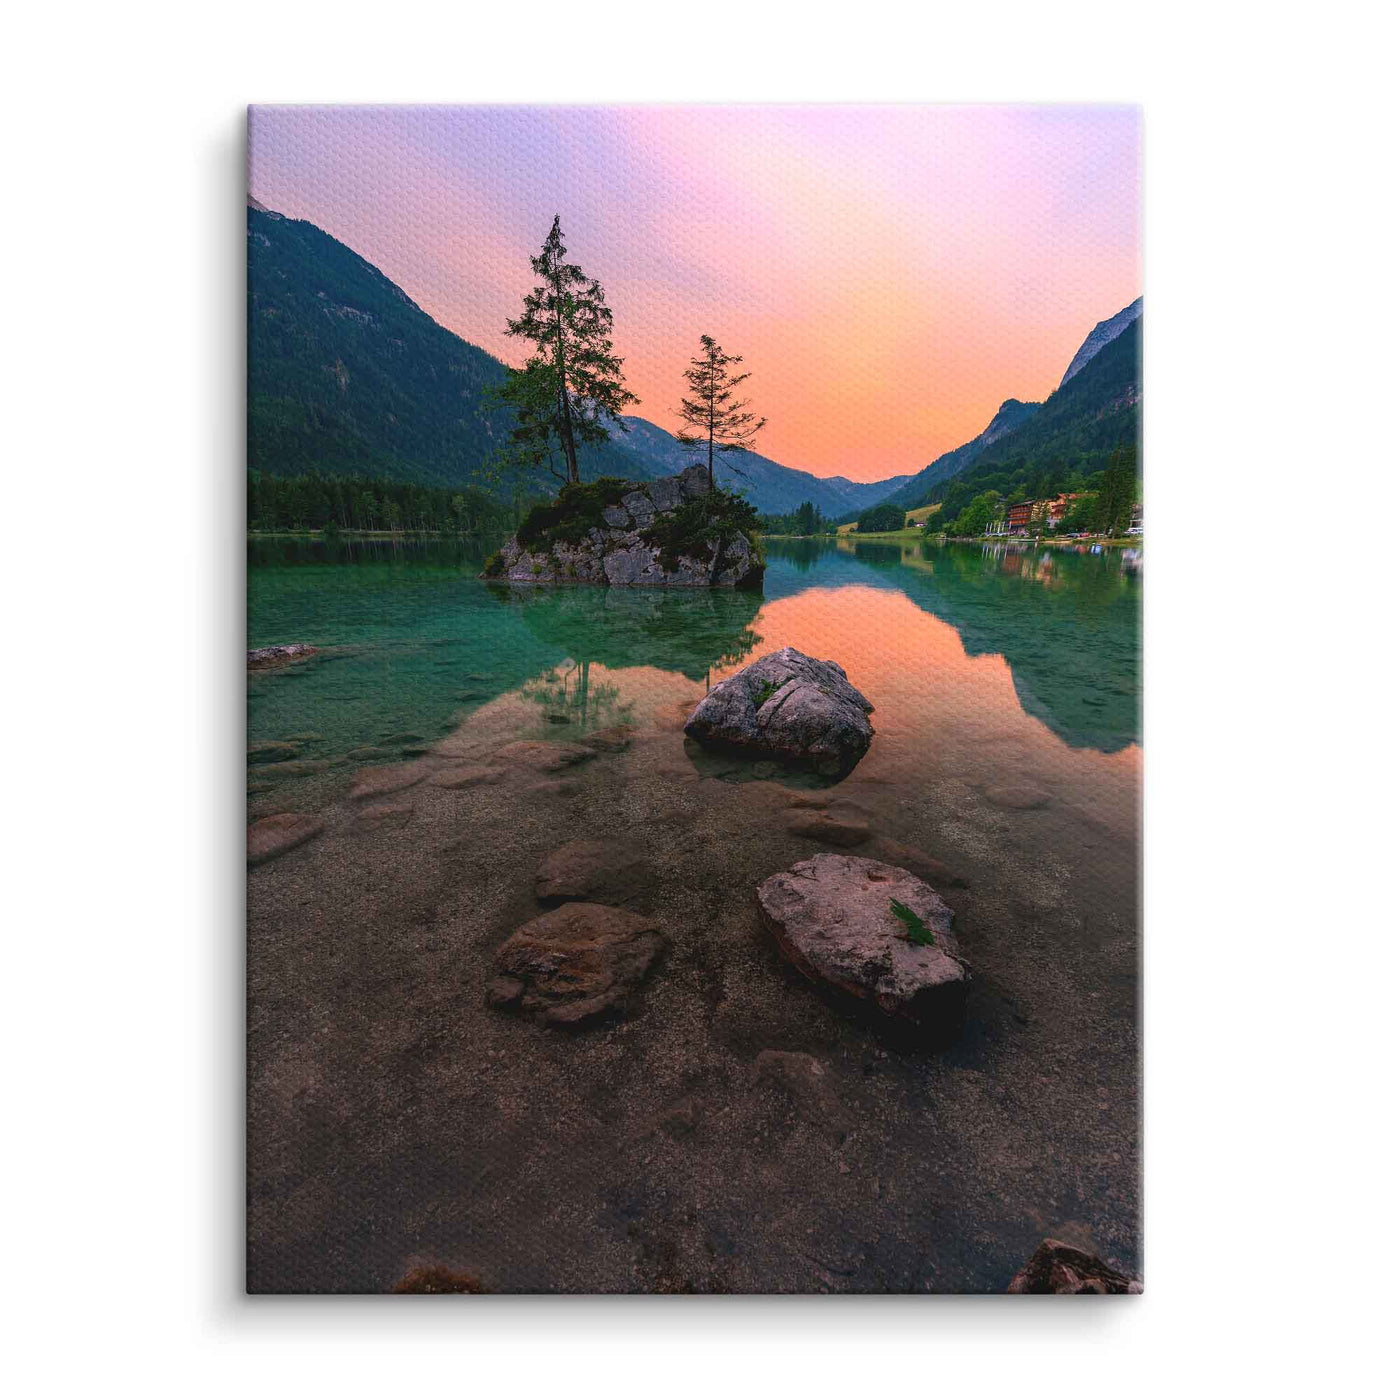 Sunrise at the mountain lake